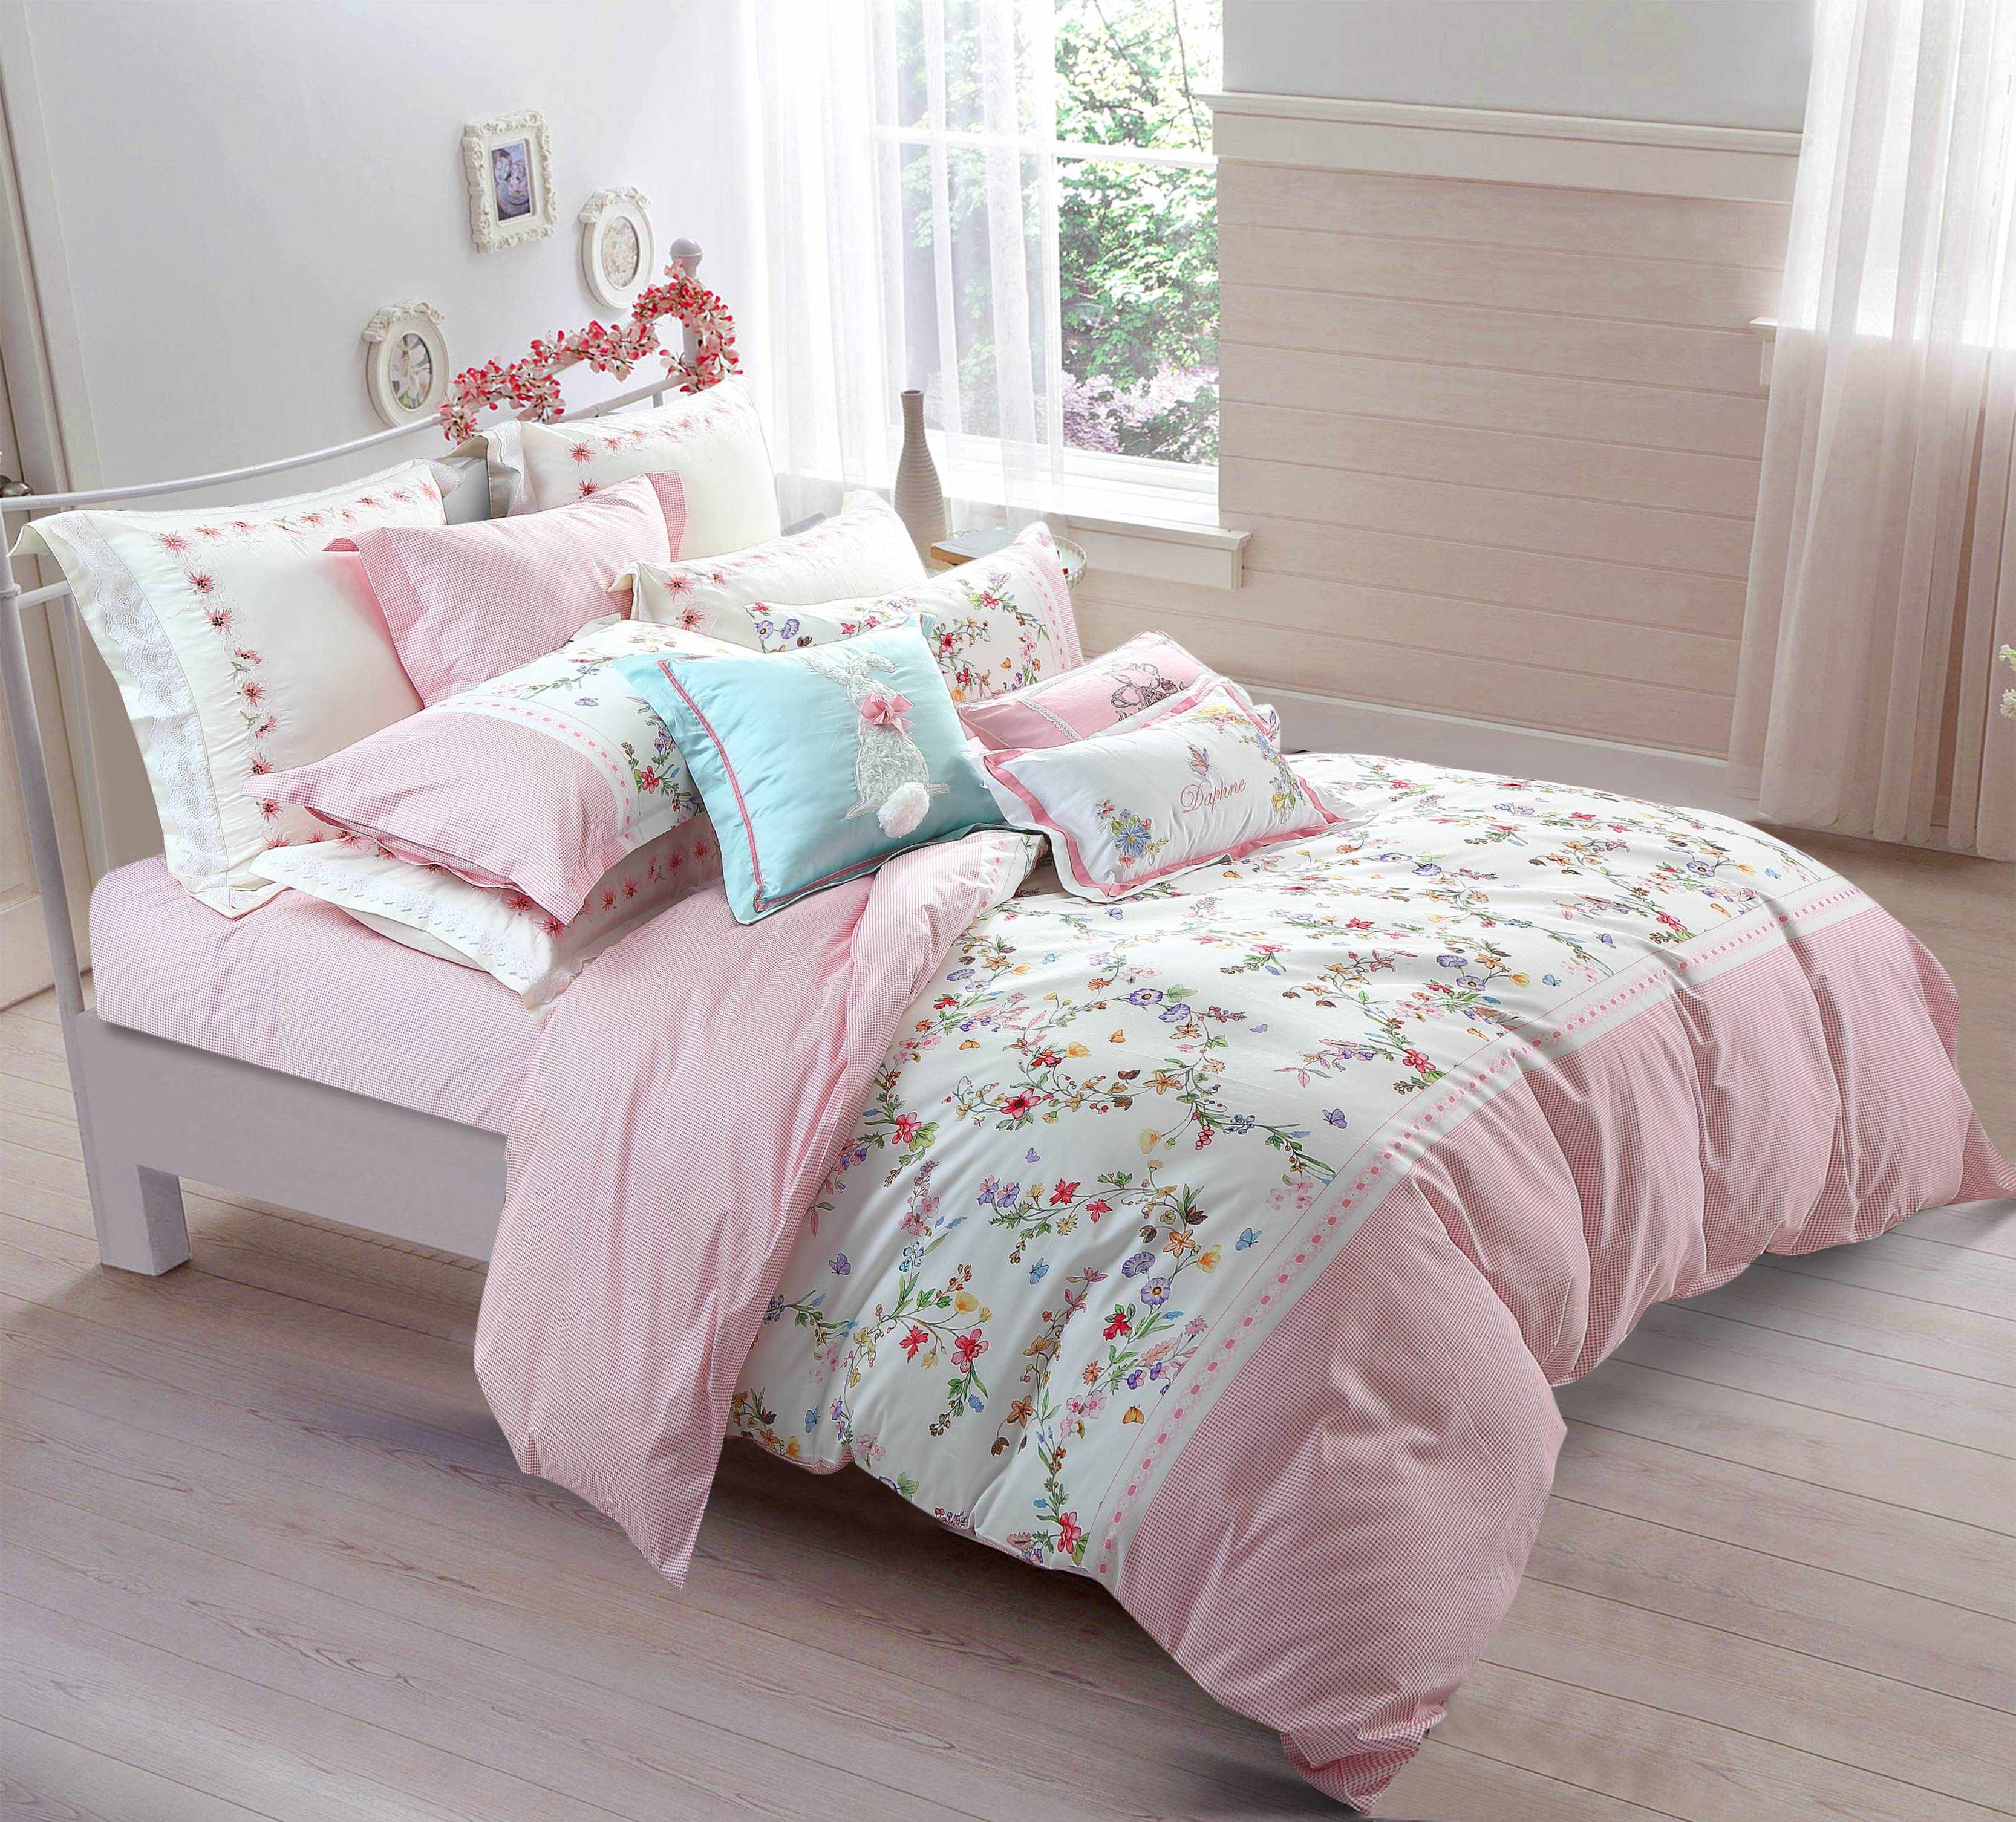 Daphne Lush Floral Pattern Bedding Set Cotton and Rayon 171095 Lyocell/Rayon/Polyester Blend Print image1